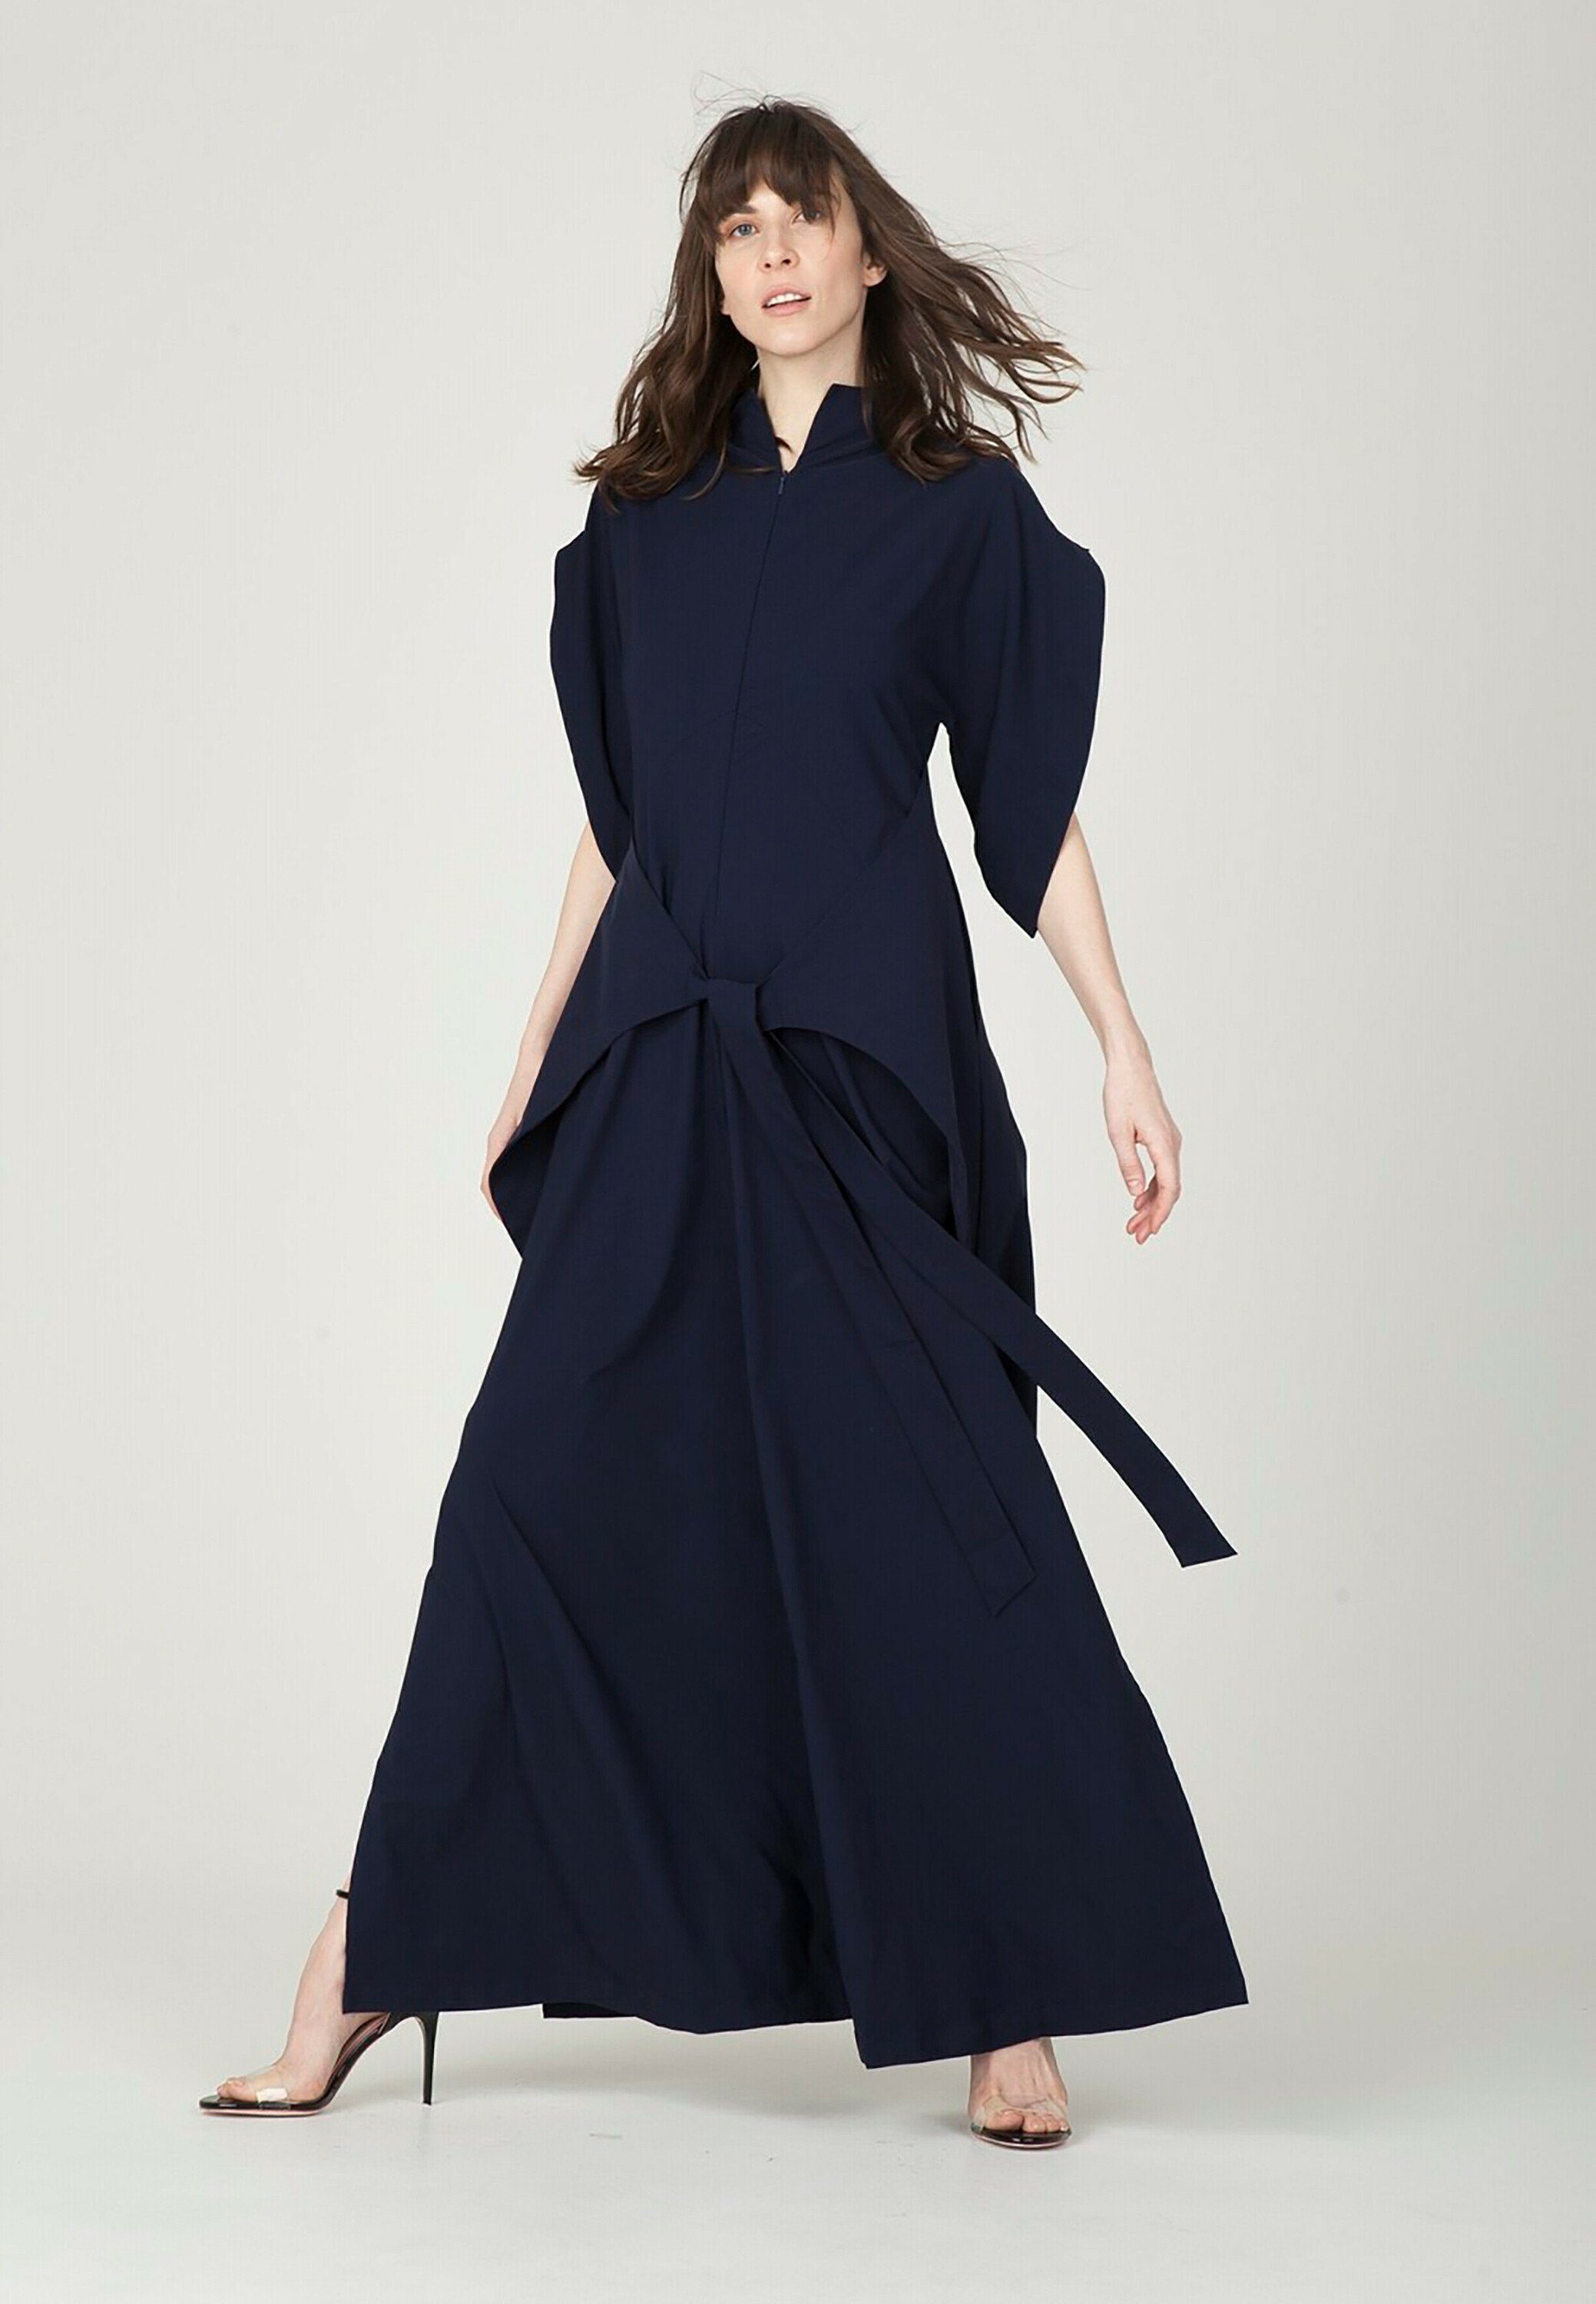 Style Monosuit MARINE Jumpsuit japanischen LEA im